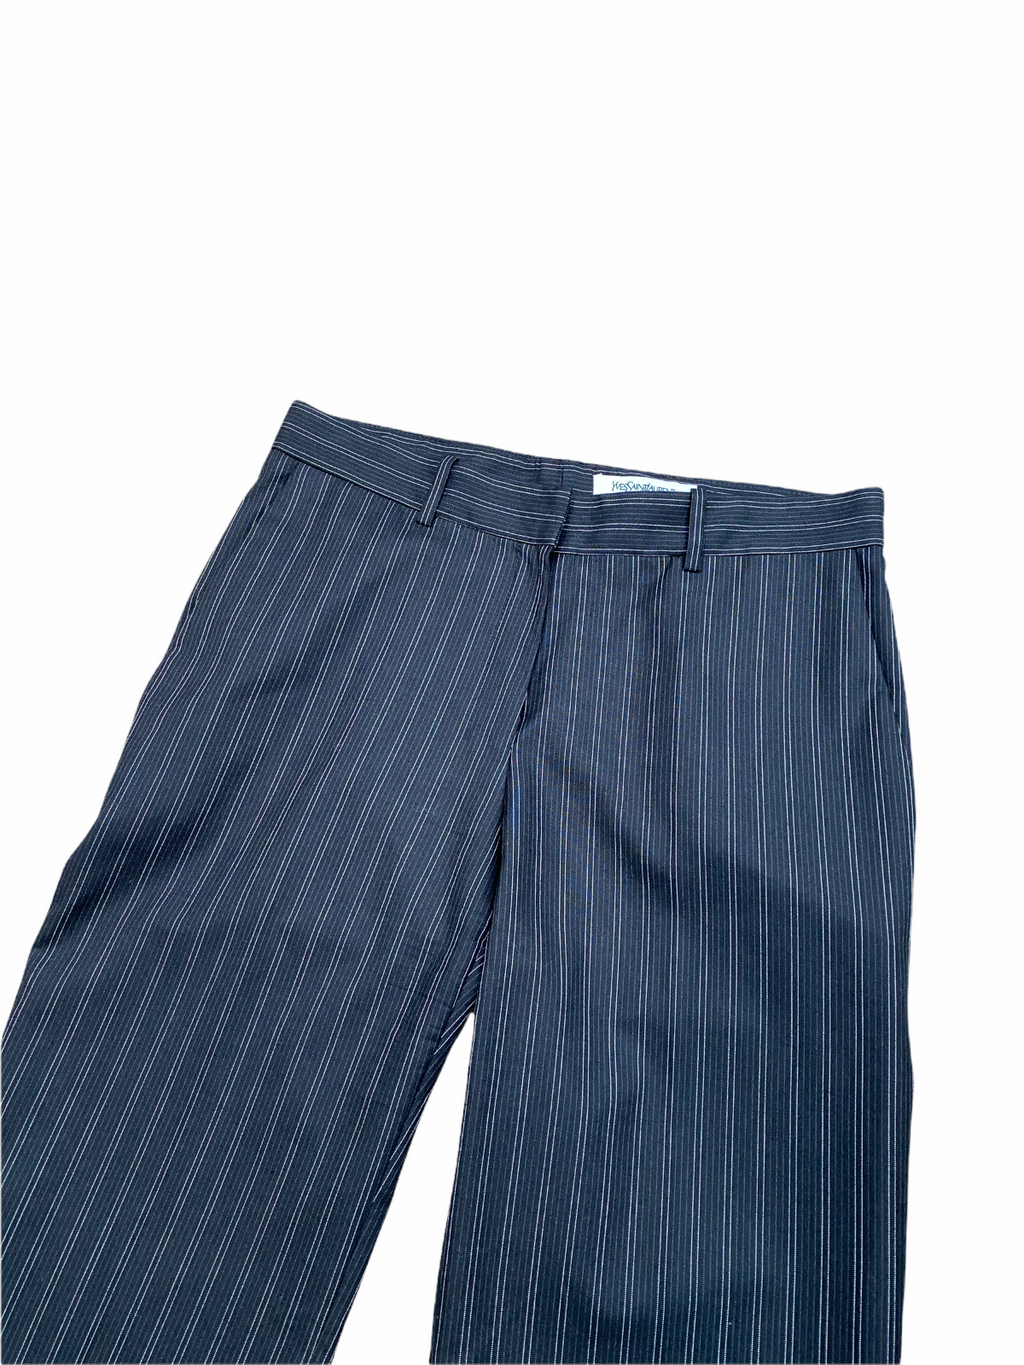 Black Wool Striped Pants  Size US 26 27